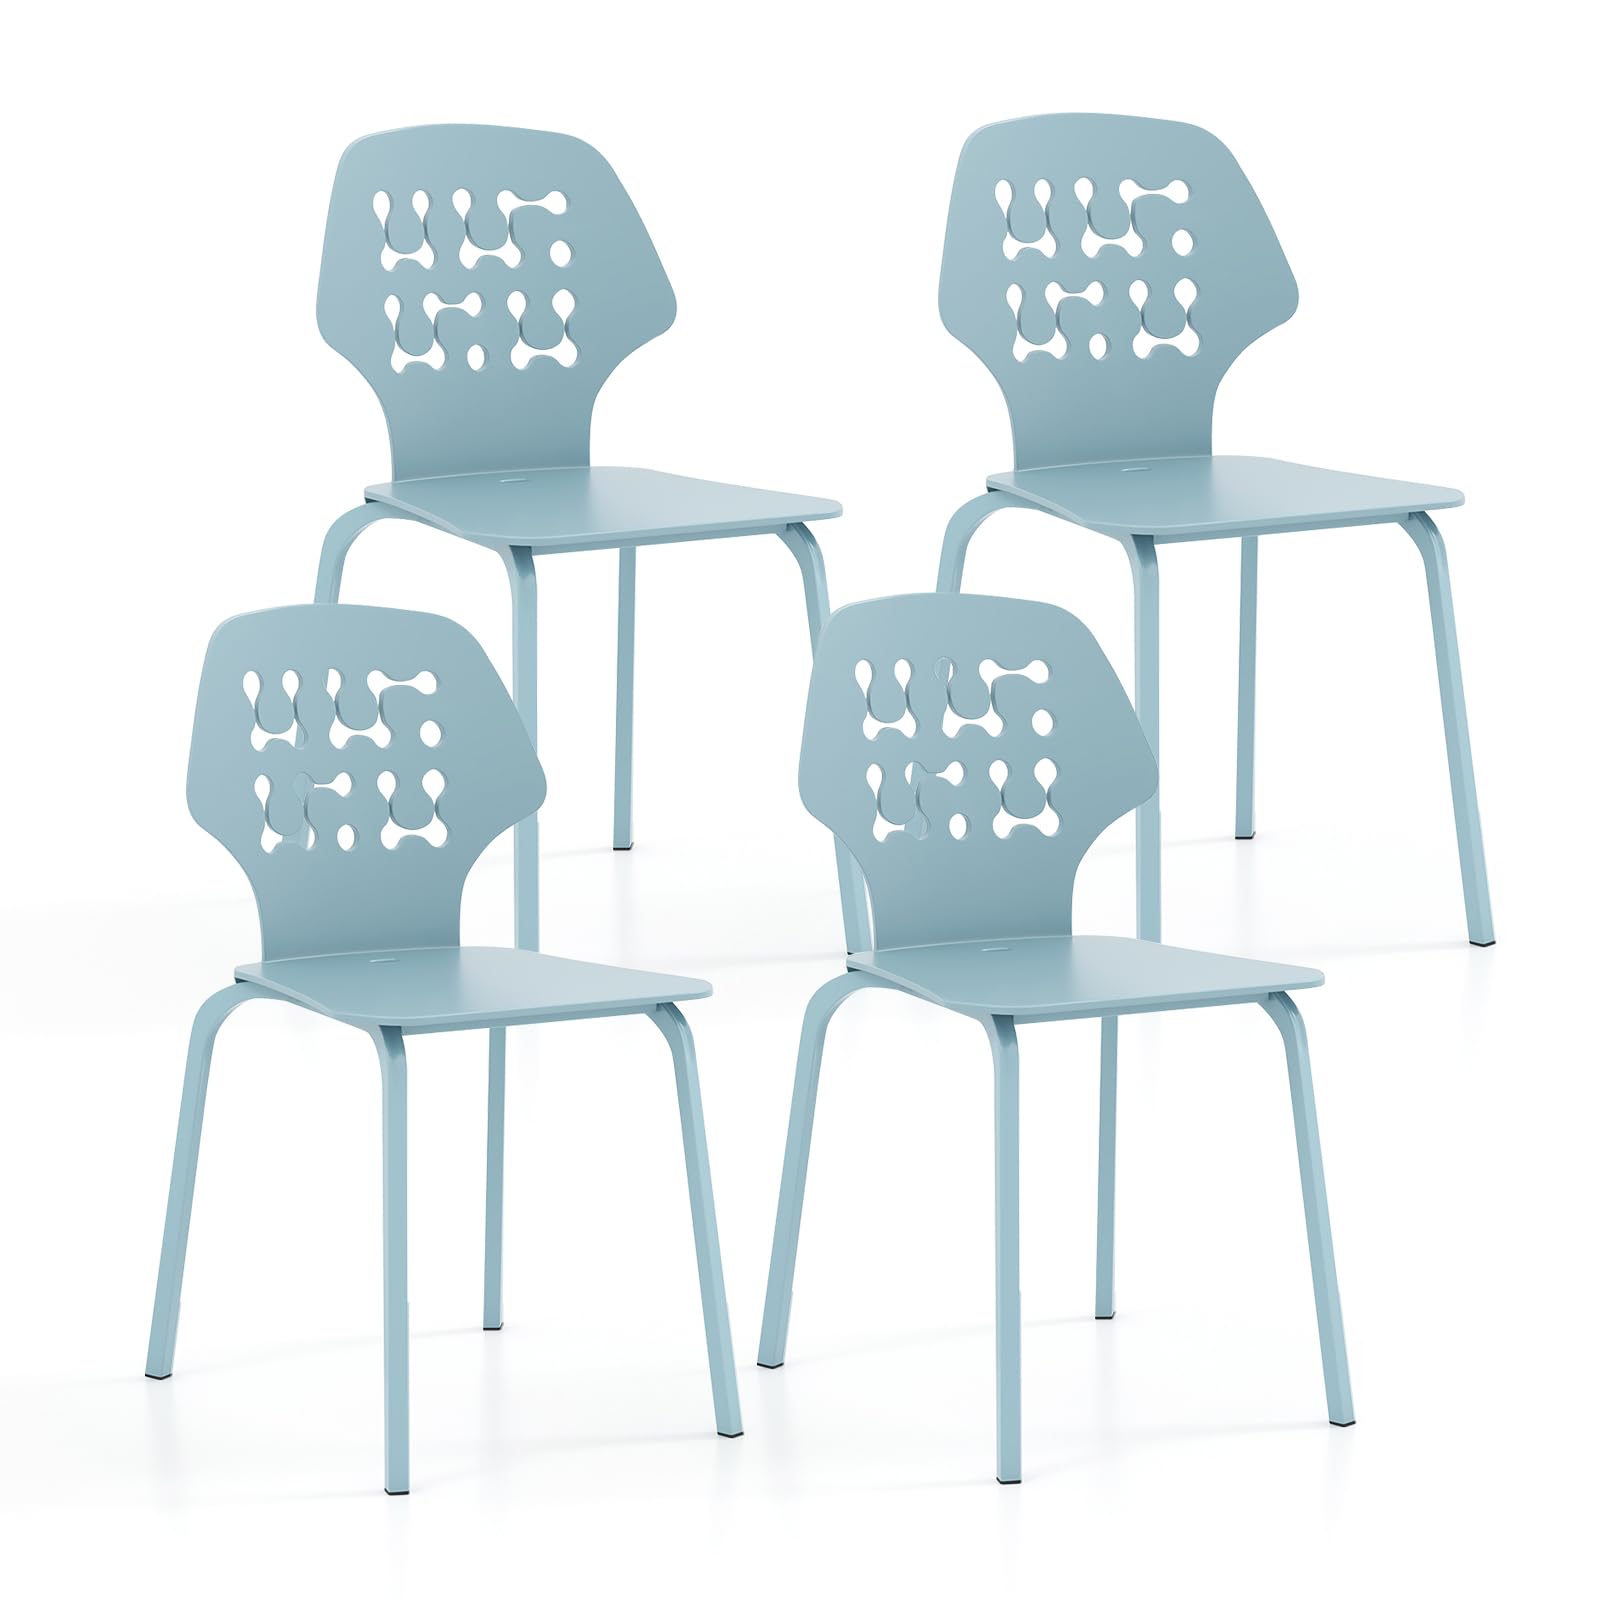 Giantex Metal Dining Chairs Set of 4